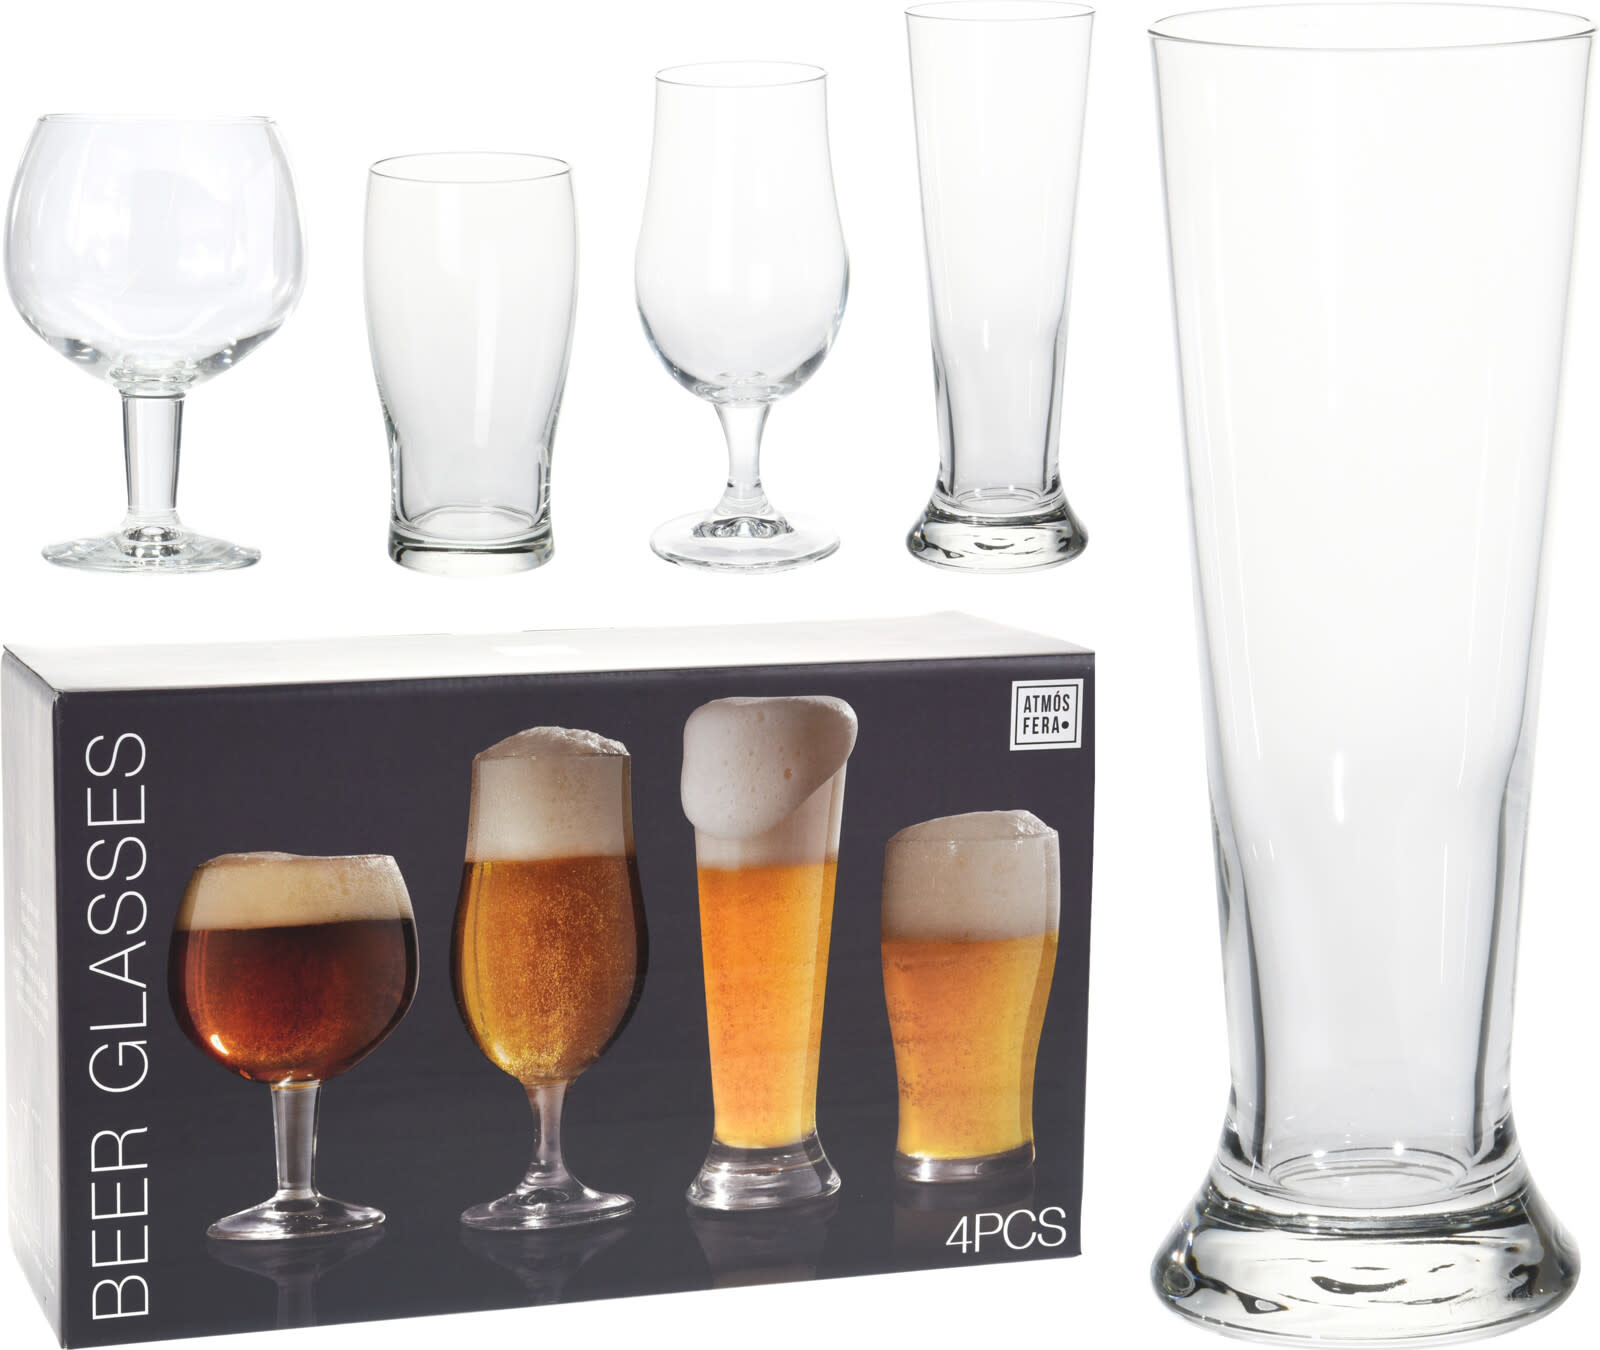 Koopman Beer Glass Box - Set of 4